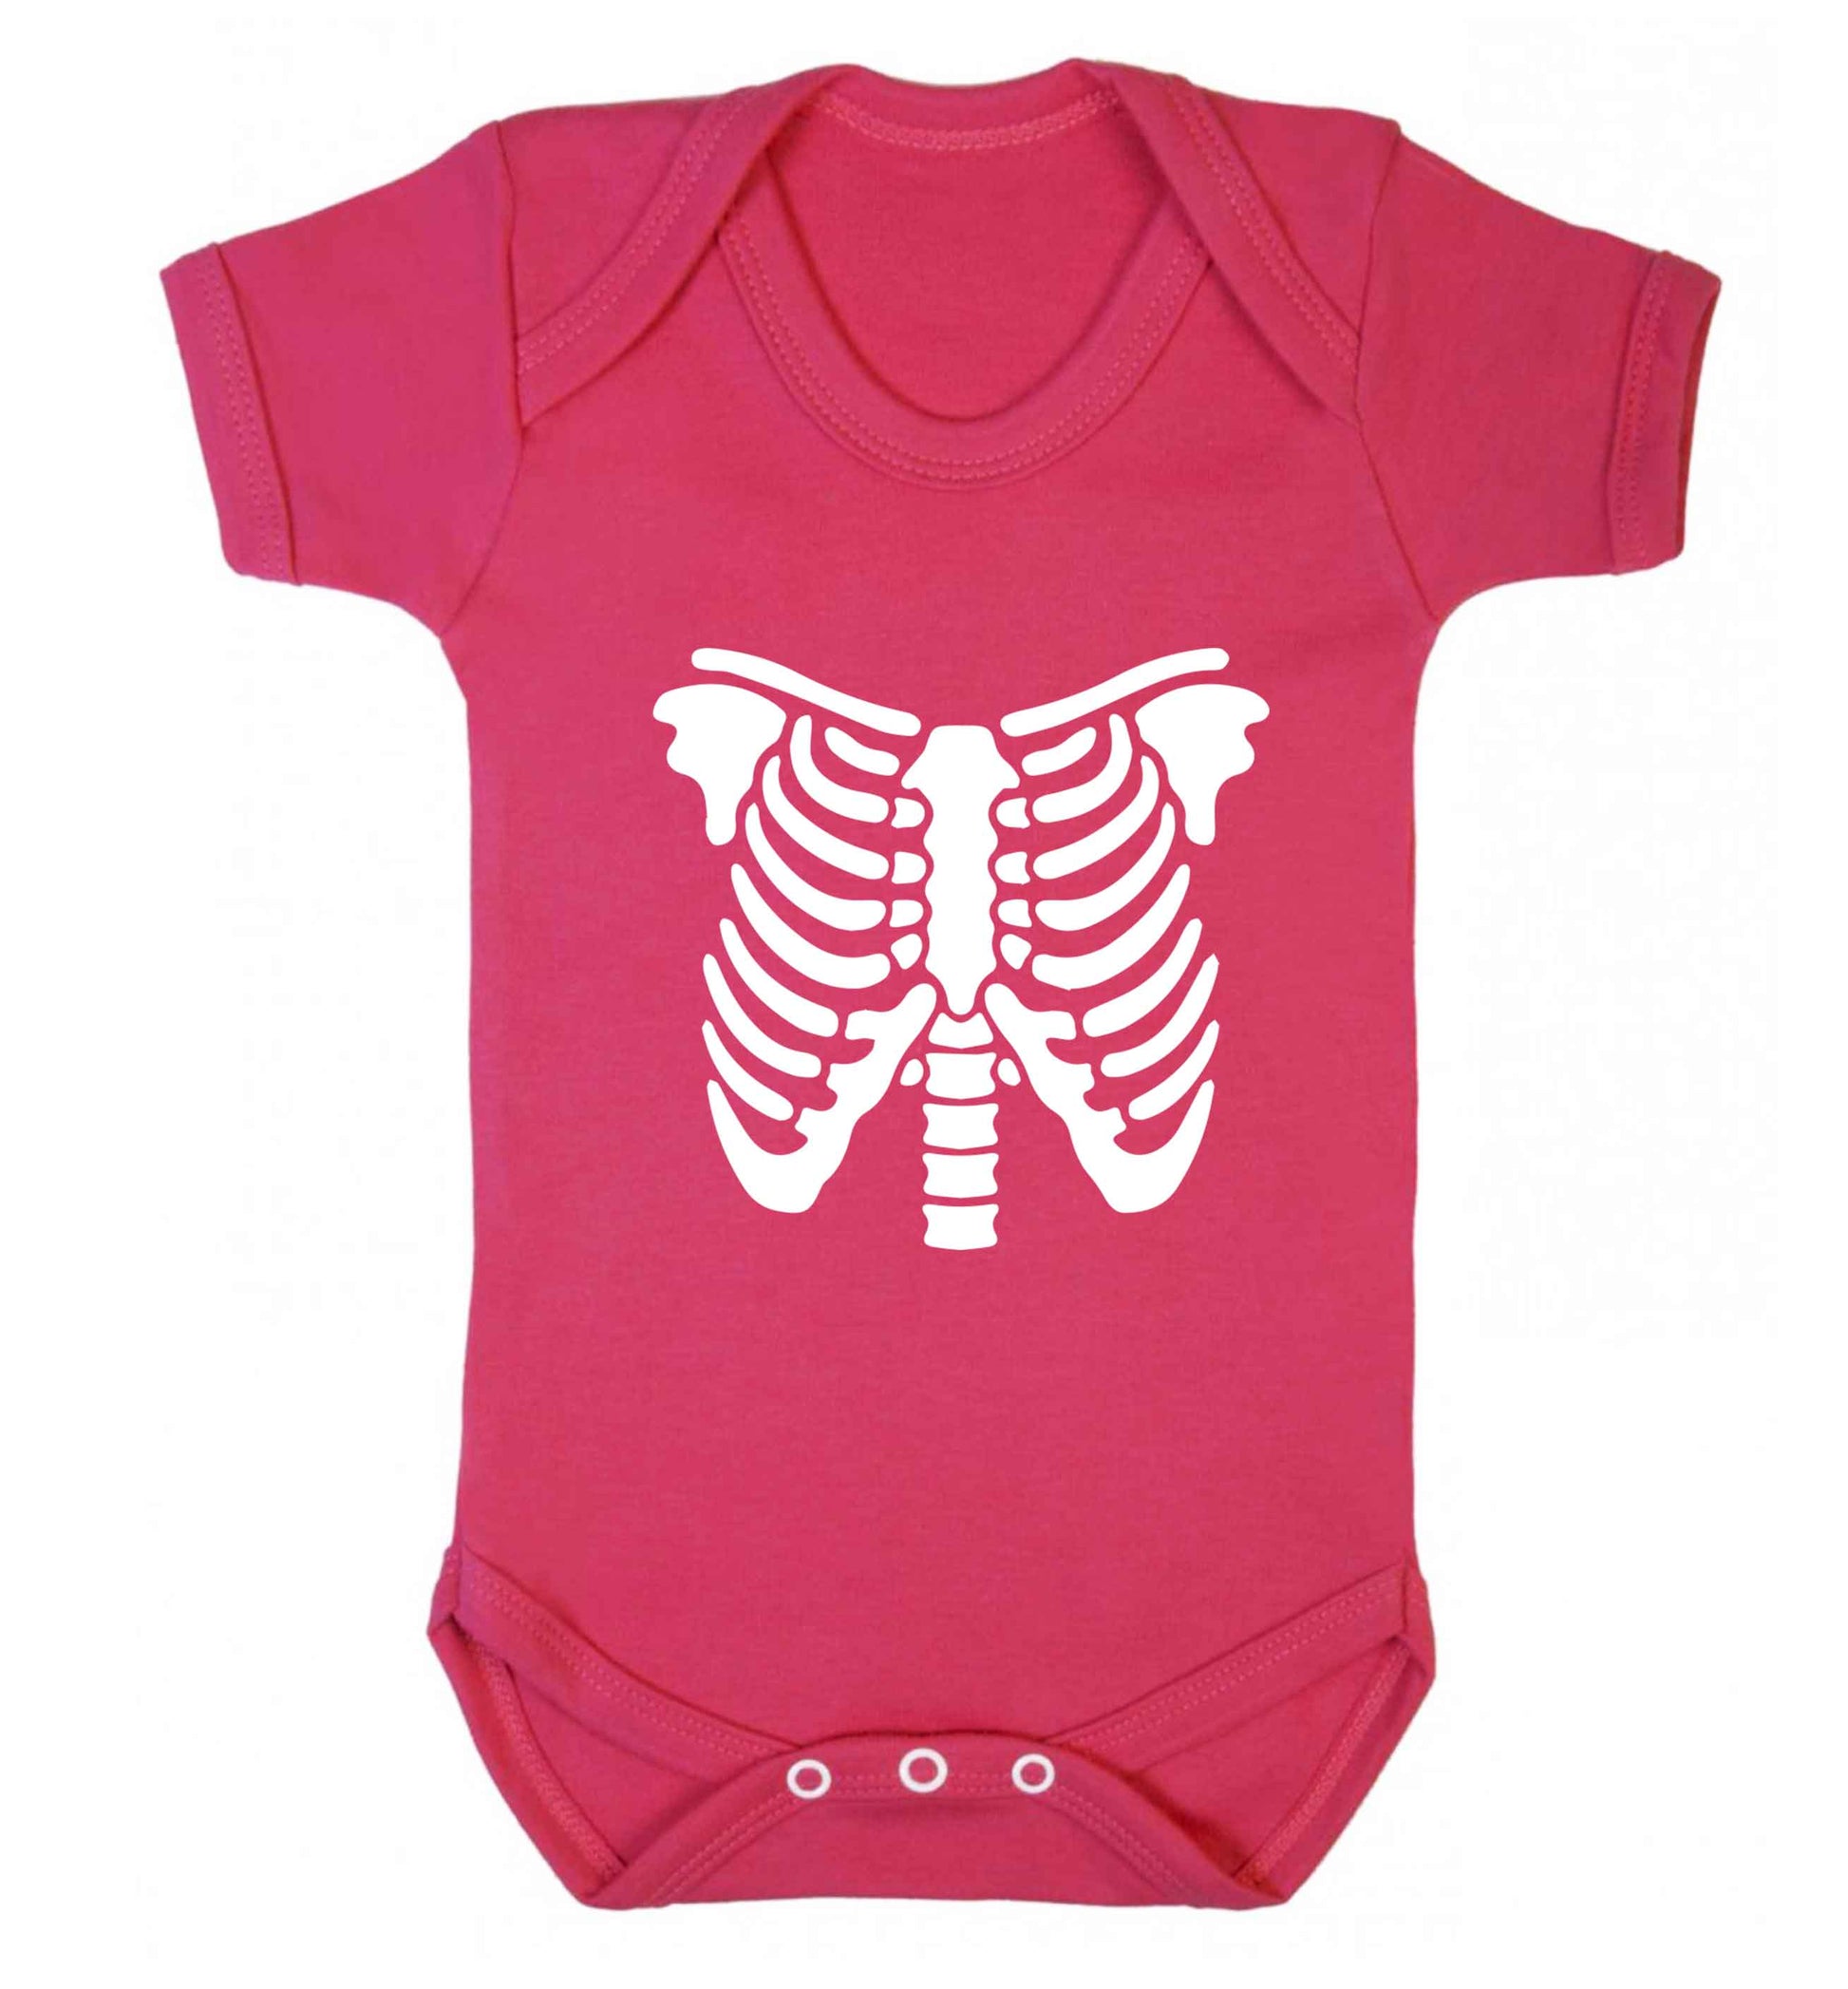 Skeleton ribcage baby vest dark pink 18-24 months